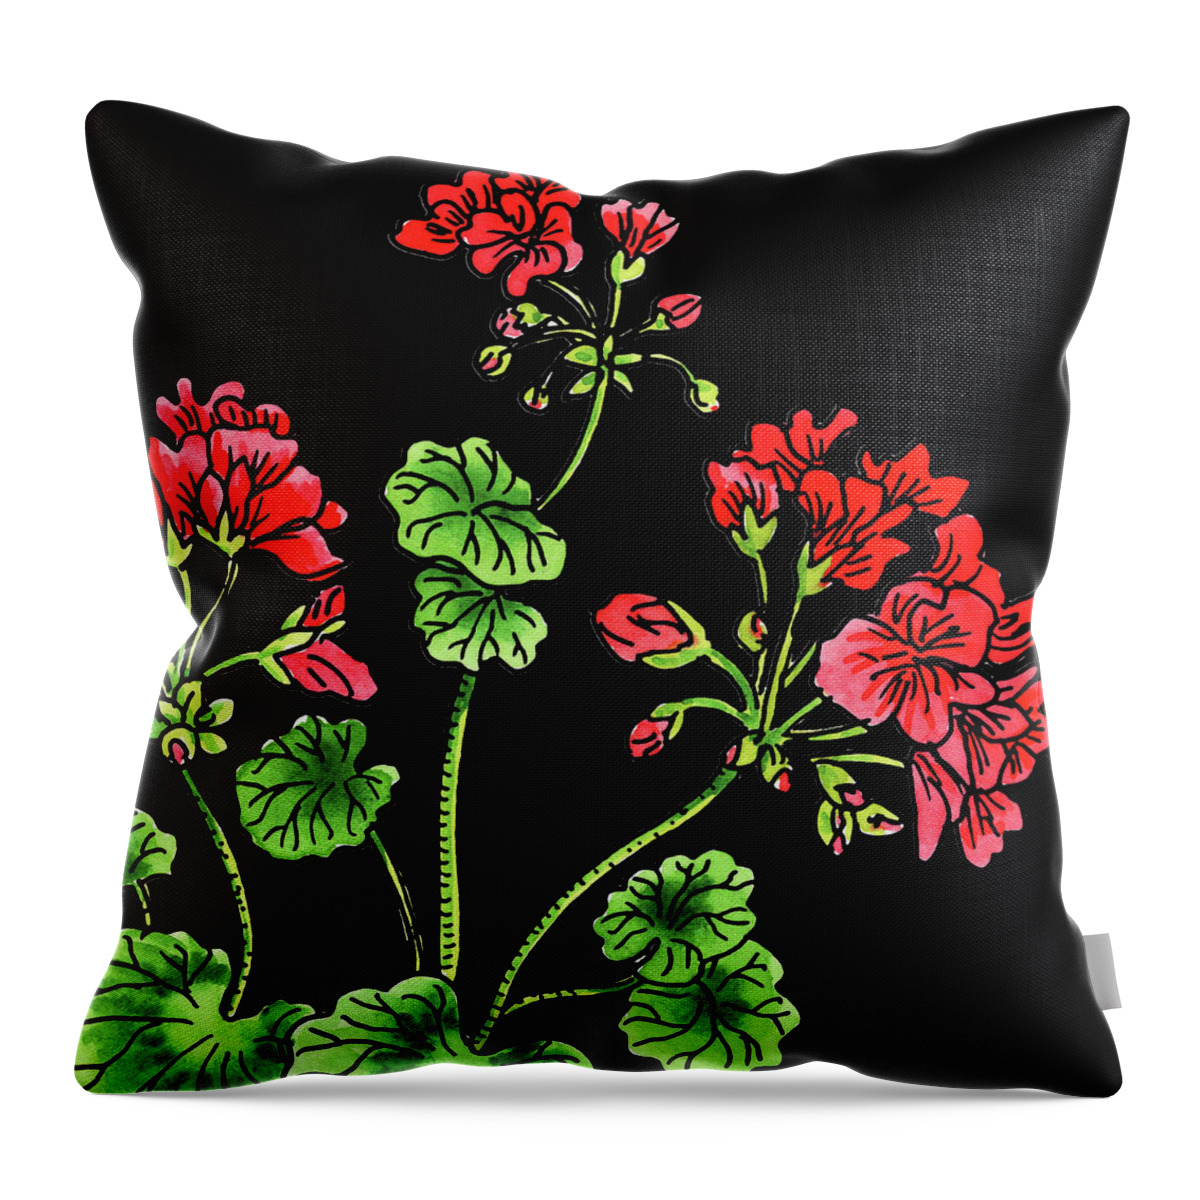 Geranium Throw Pillow featuring the painting Watercolor Flower Red Geranium by Irina Sztukowski